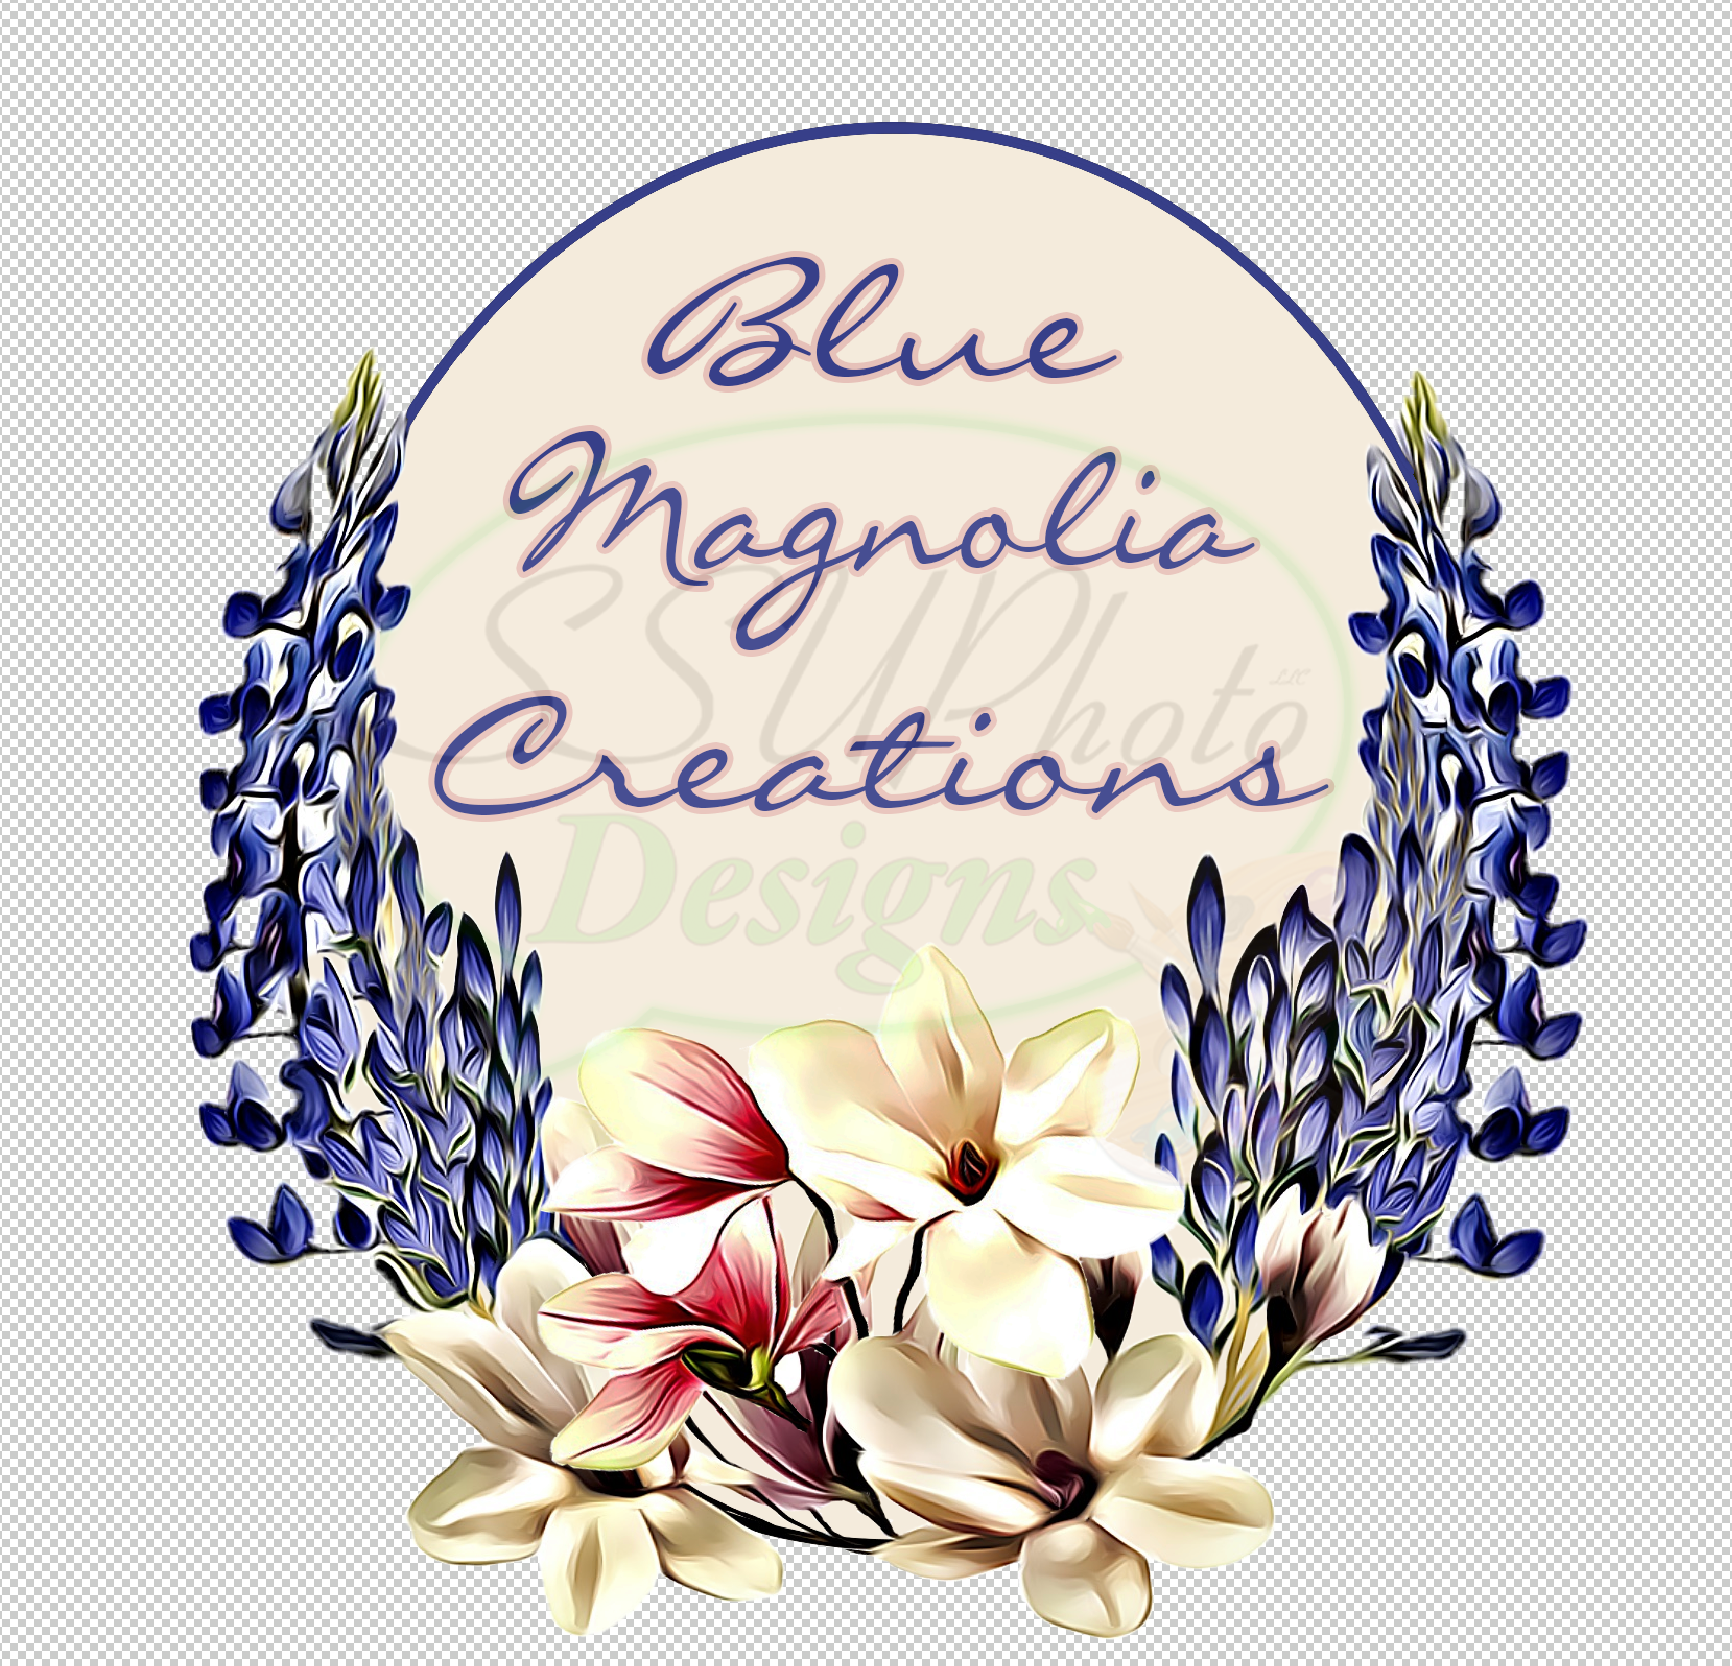 Blue Magnolia Creations Logo